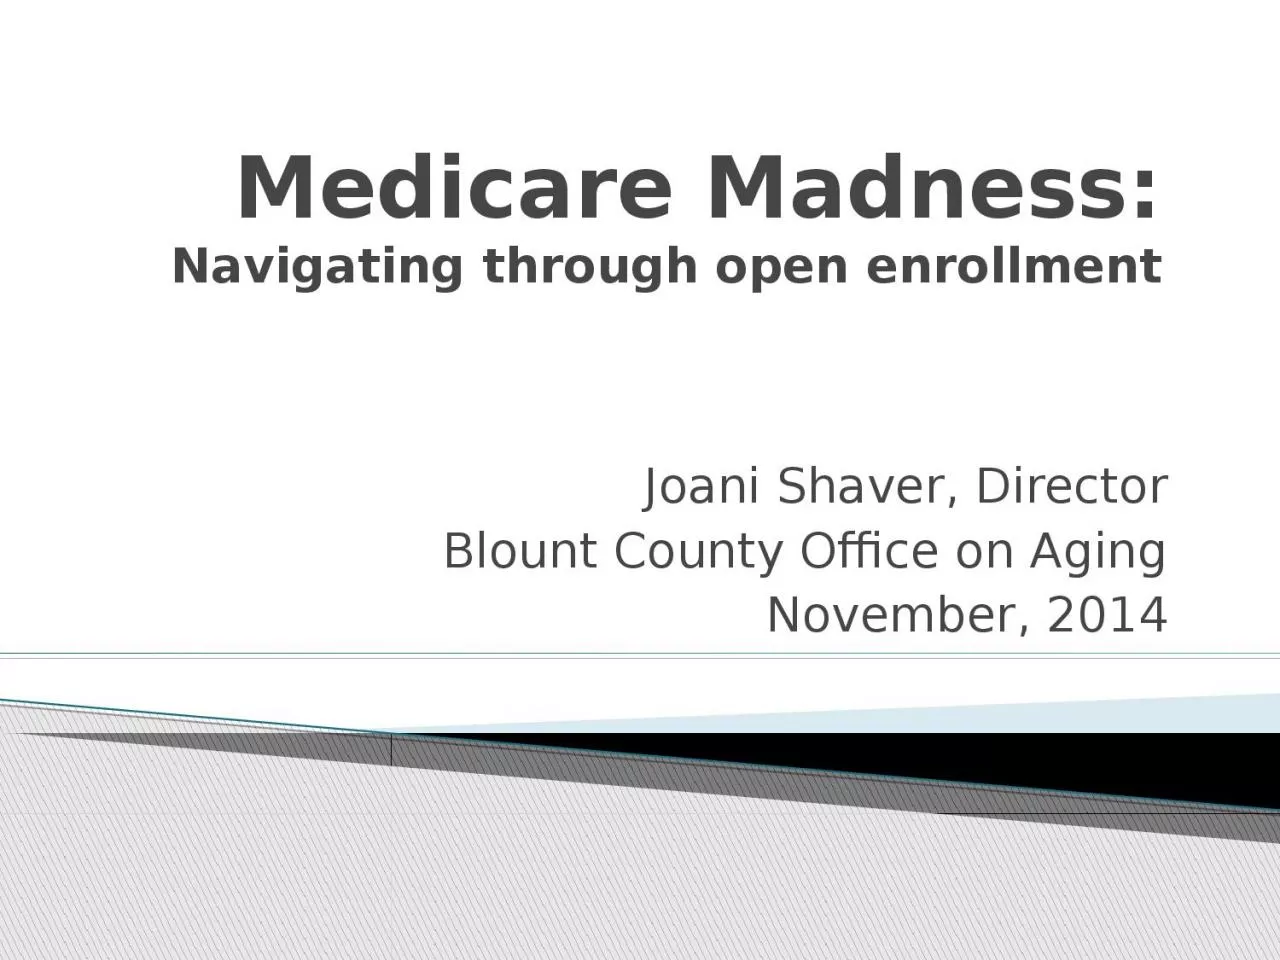 Medicare Madness: Navigating through open